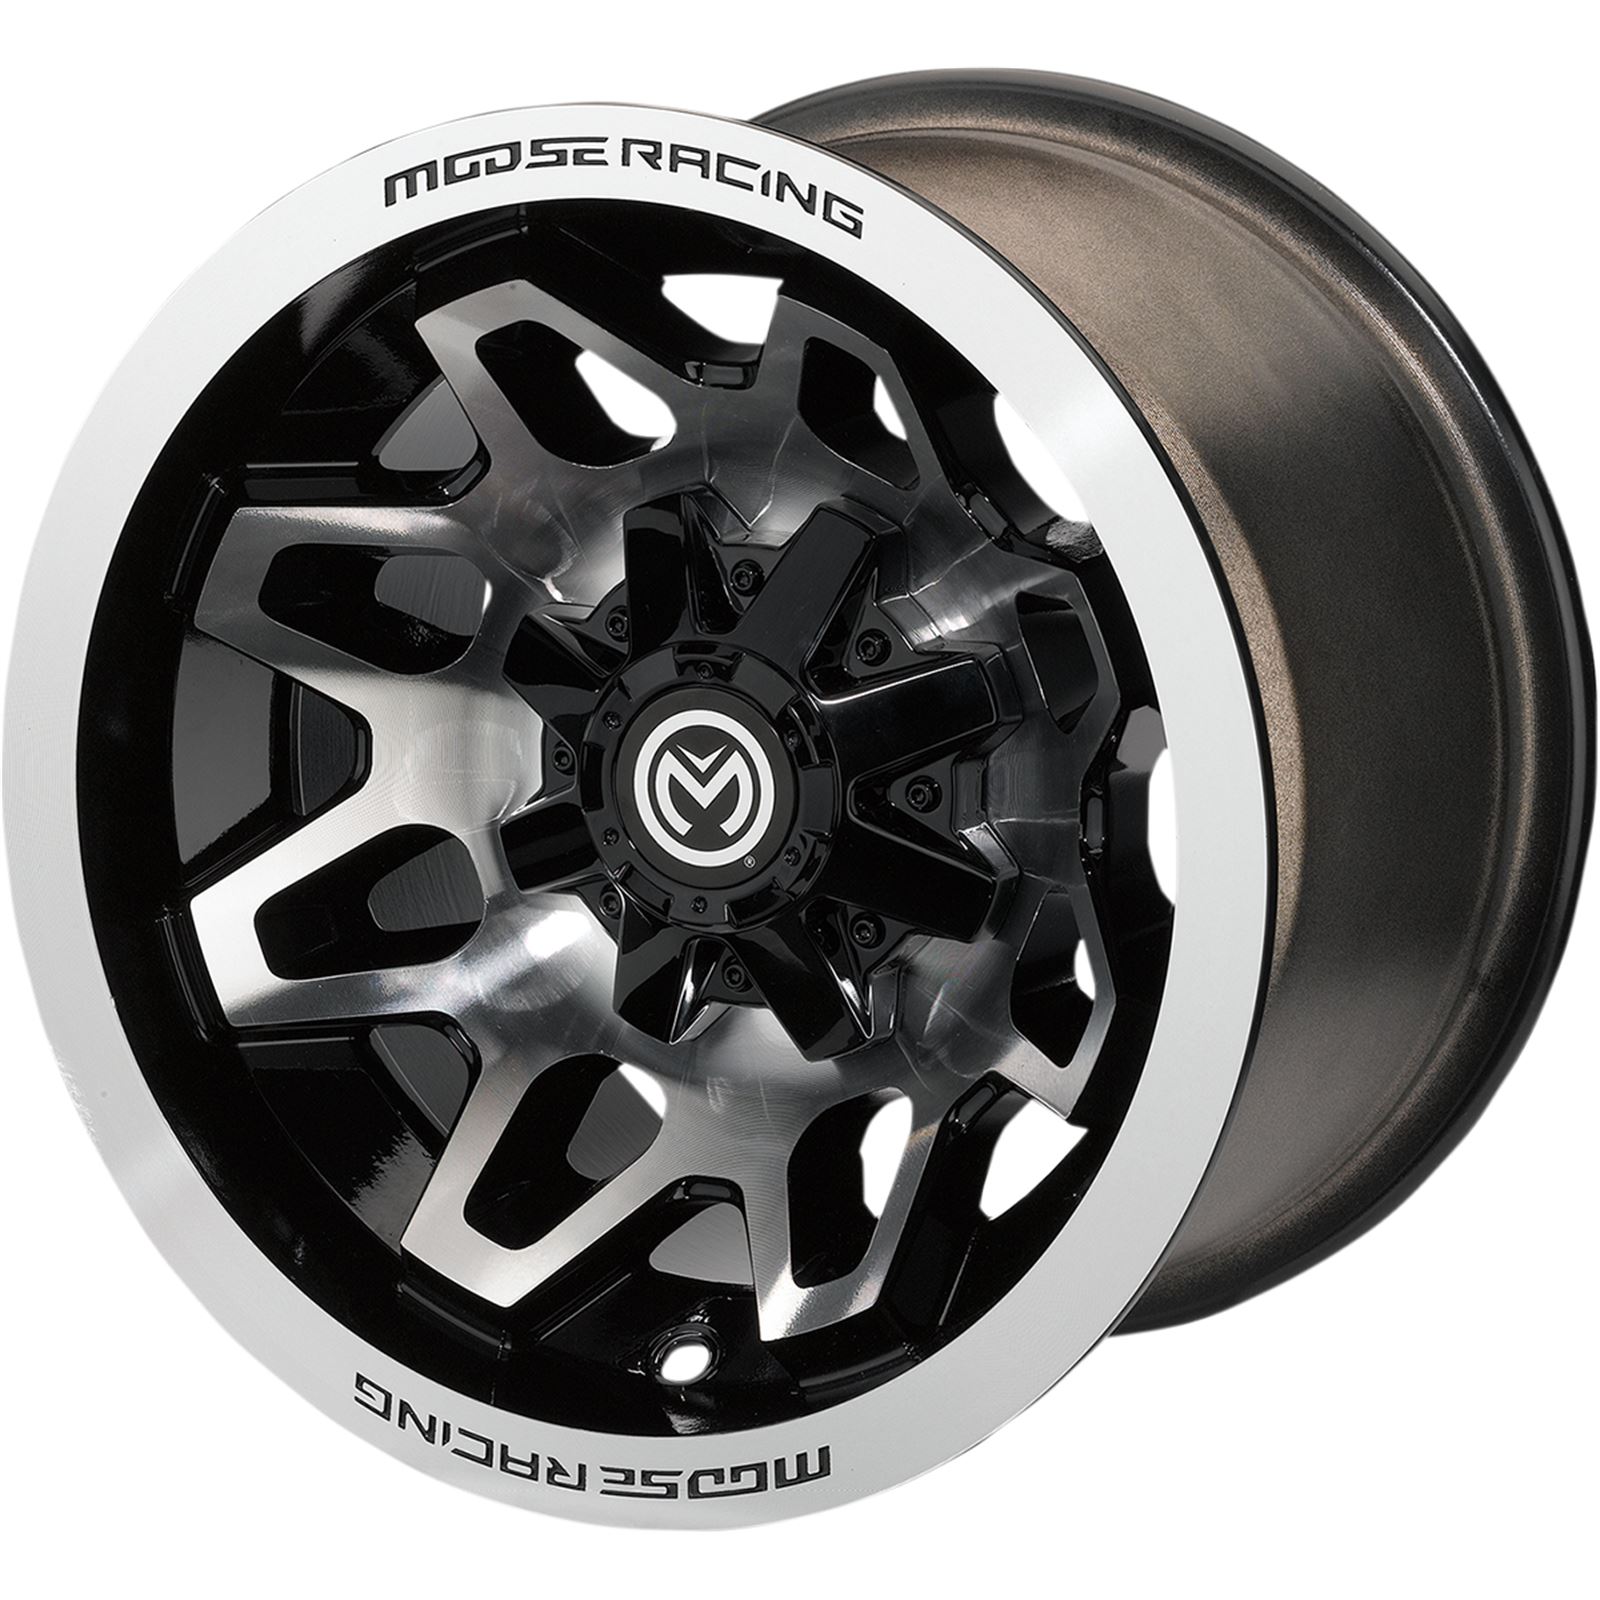 Moose Racing 416X Wheel - Front/Rear - Machined Black - 14x7 - 4/110 - 5+2